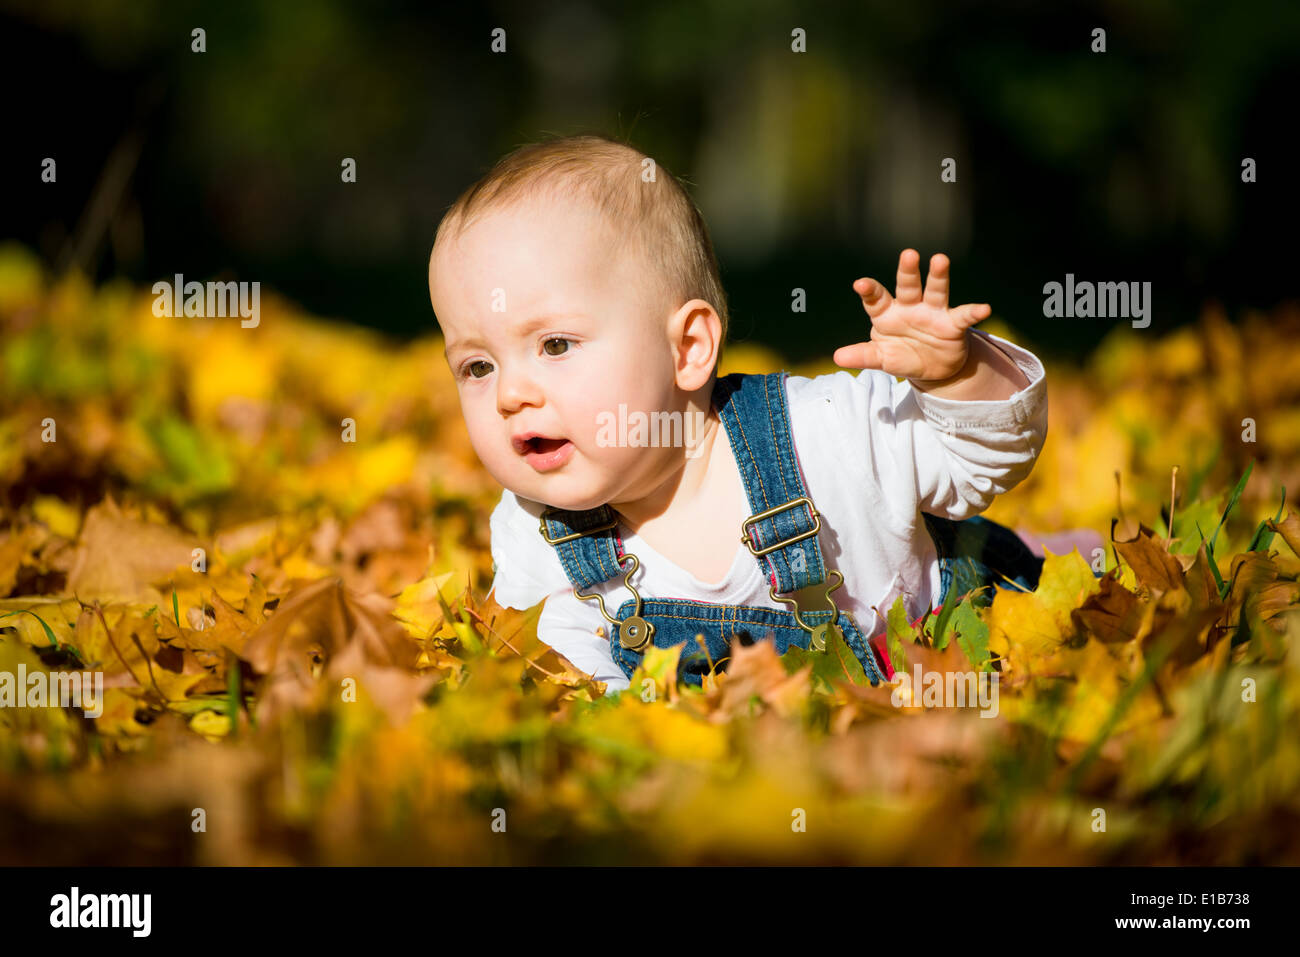 Beautiful baby crawling in fallen leaves - fall scene Stock Photo